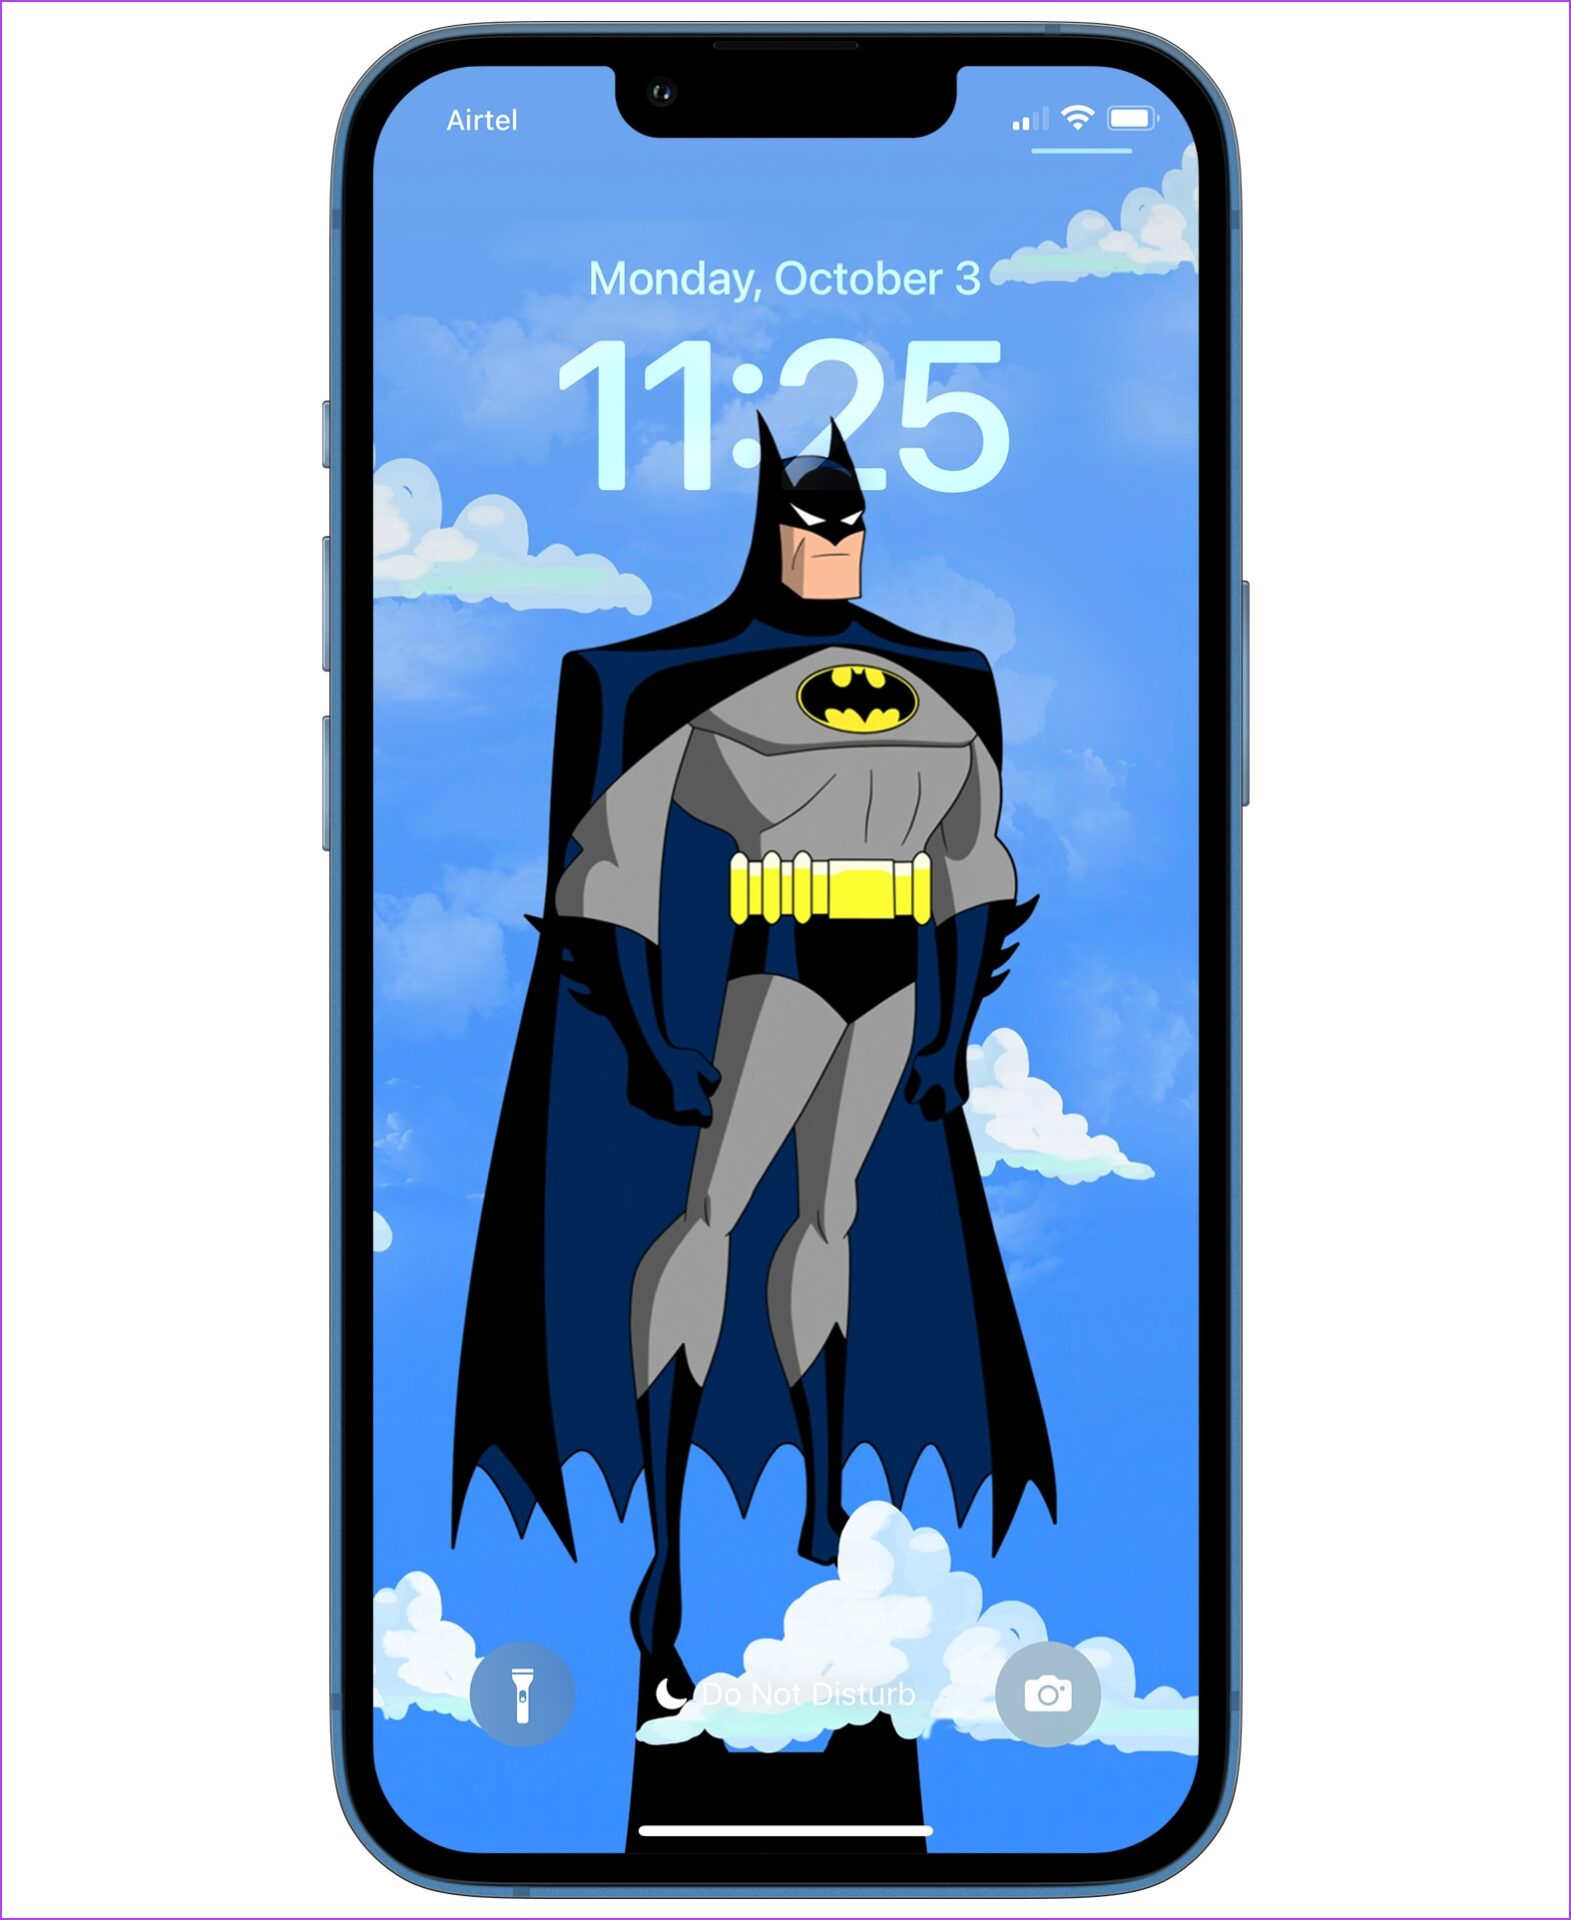 Batman Dark Minimal - IPhone Wallpapers : iPhone Wallpapers